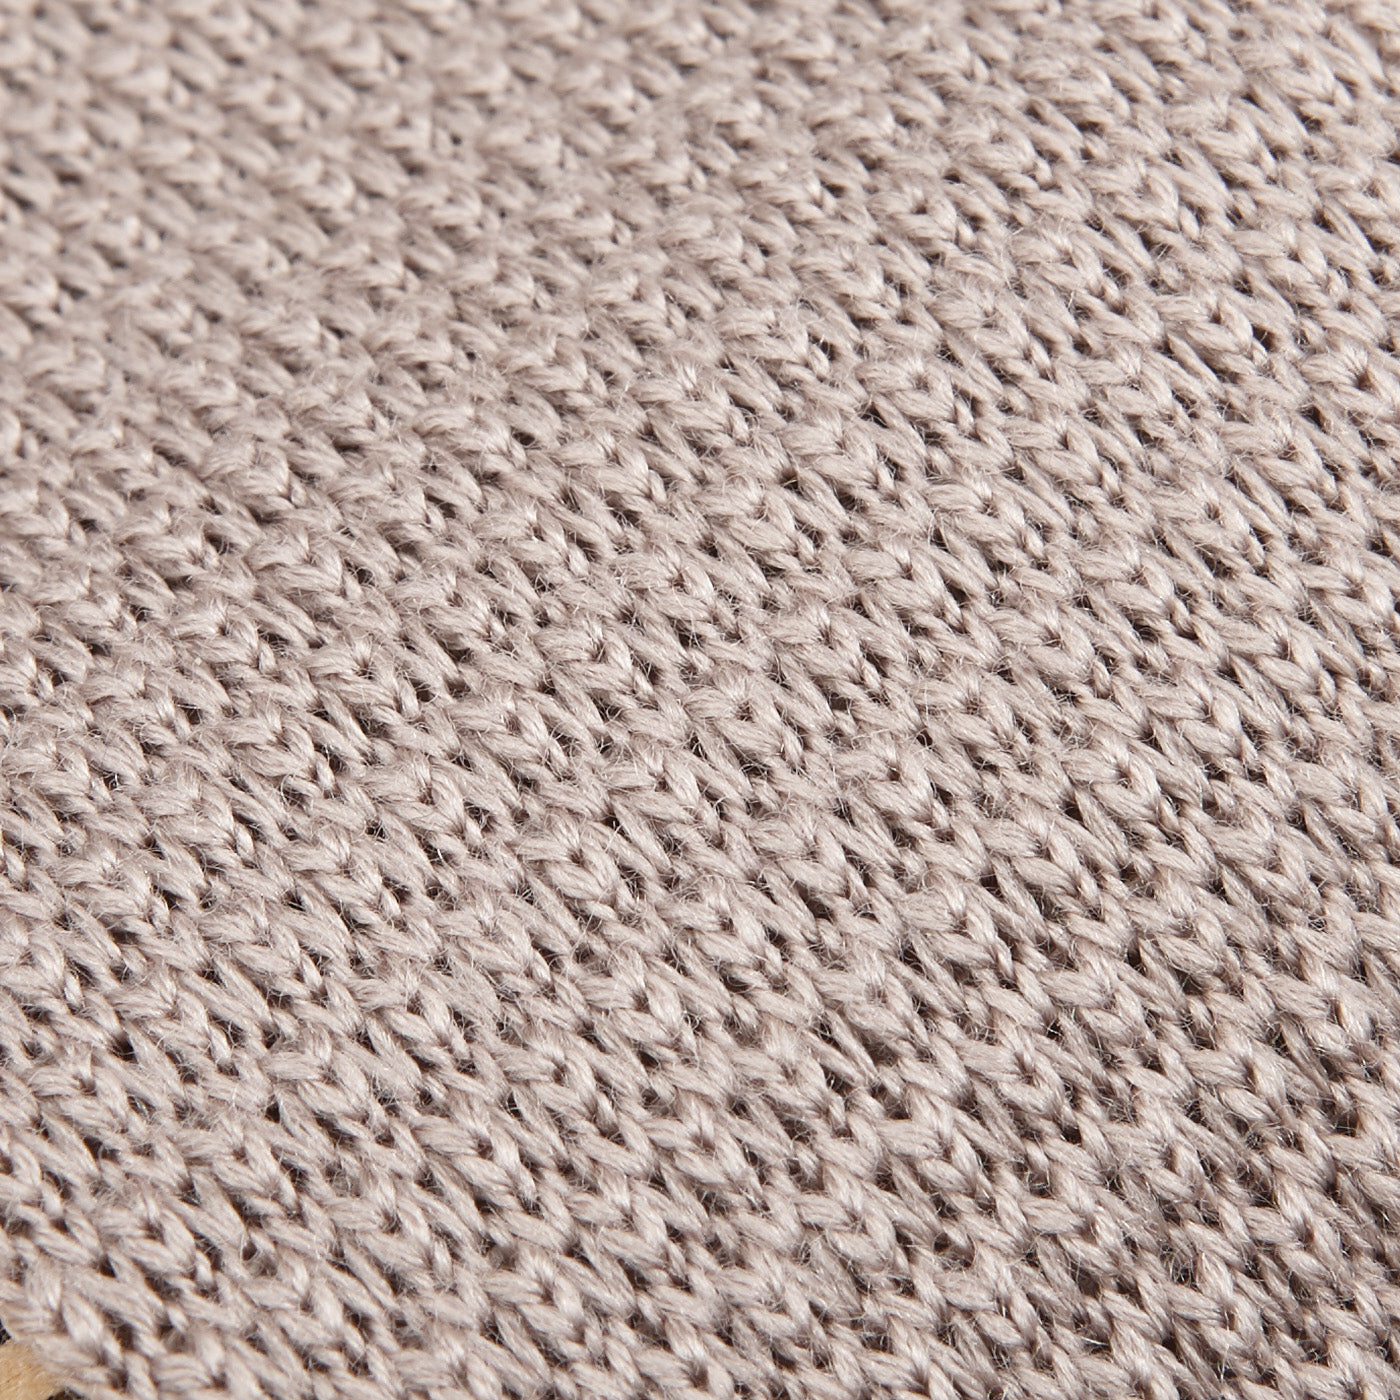 Amanda Christensen Taupe Beige Knitted Wool Tie Fabric